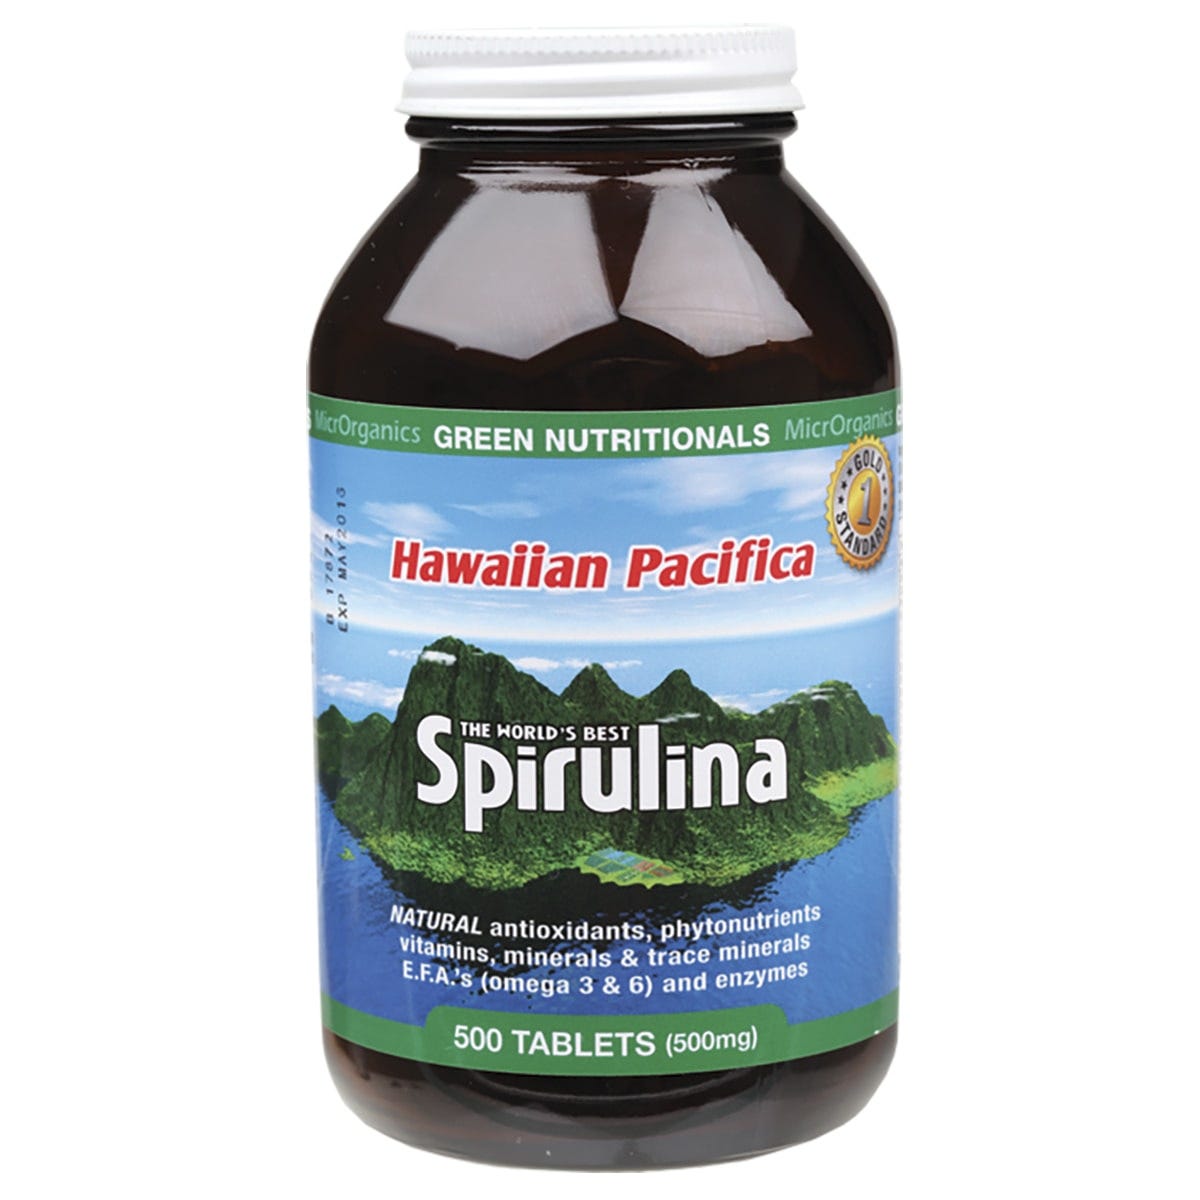 Green Nutritionals Hawaiian Pacifica Spirulina Tablets 500mg 500 Tabs - Dr Earth - Greens